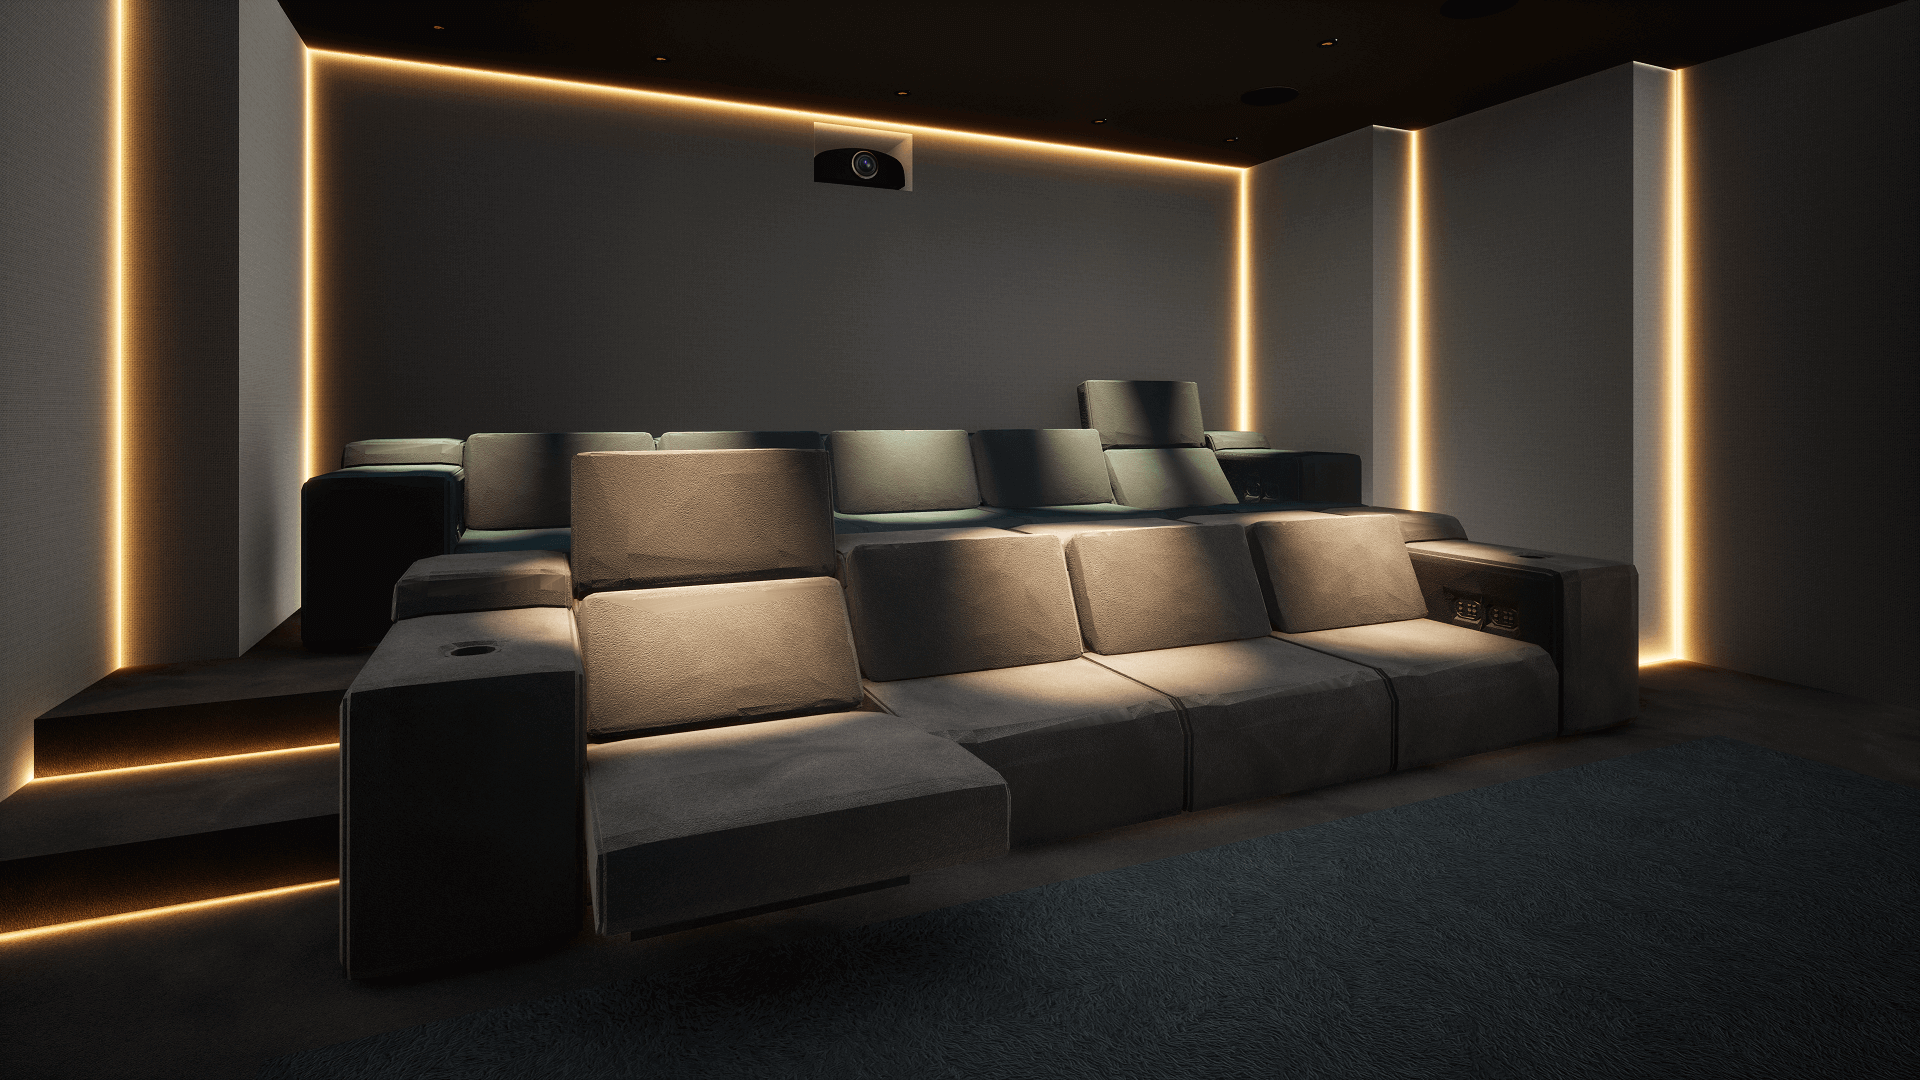 Home Cinema Room Design - District One, Dubai | CustomControls